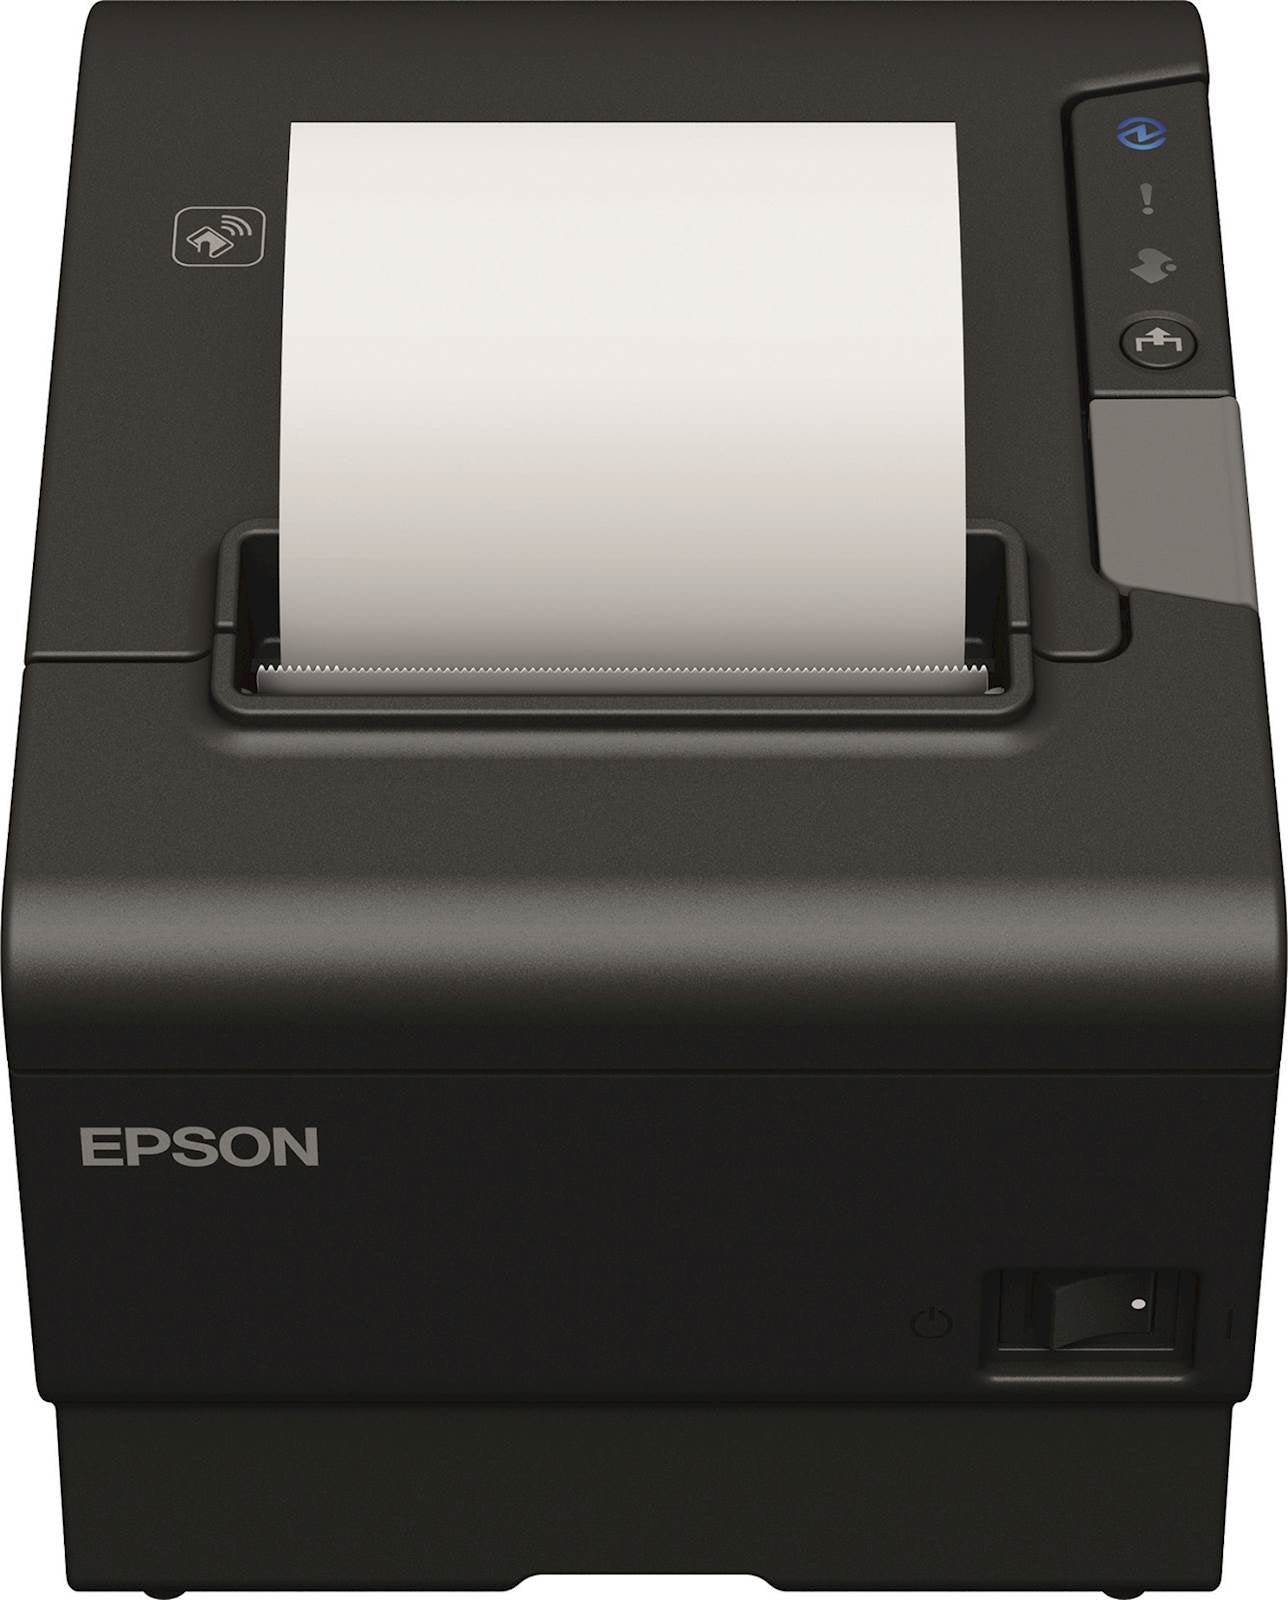 Printer EPSON TM-T88VI-111